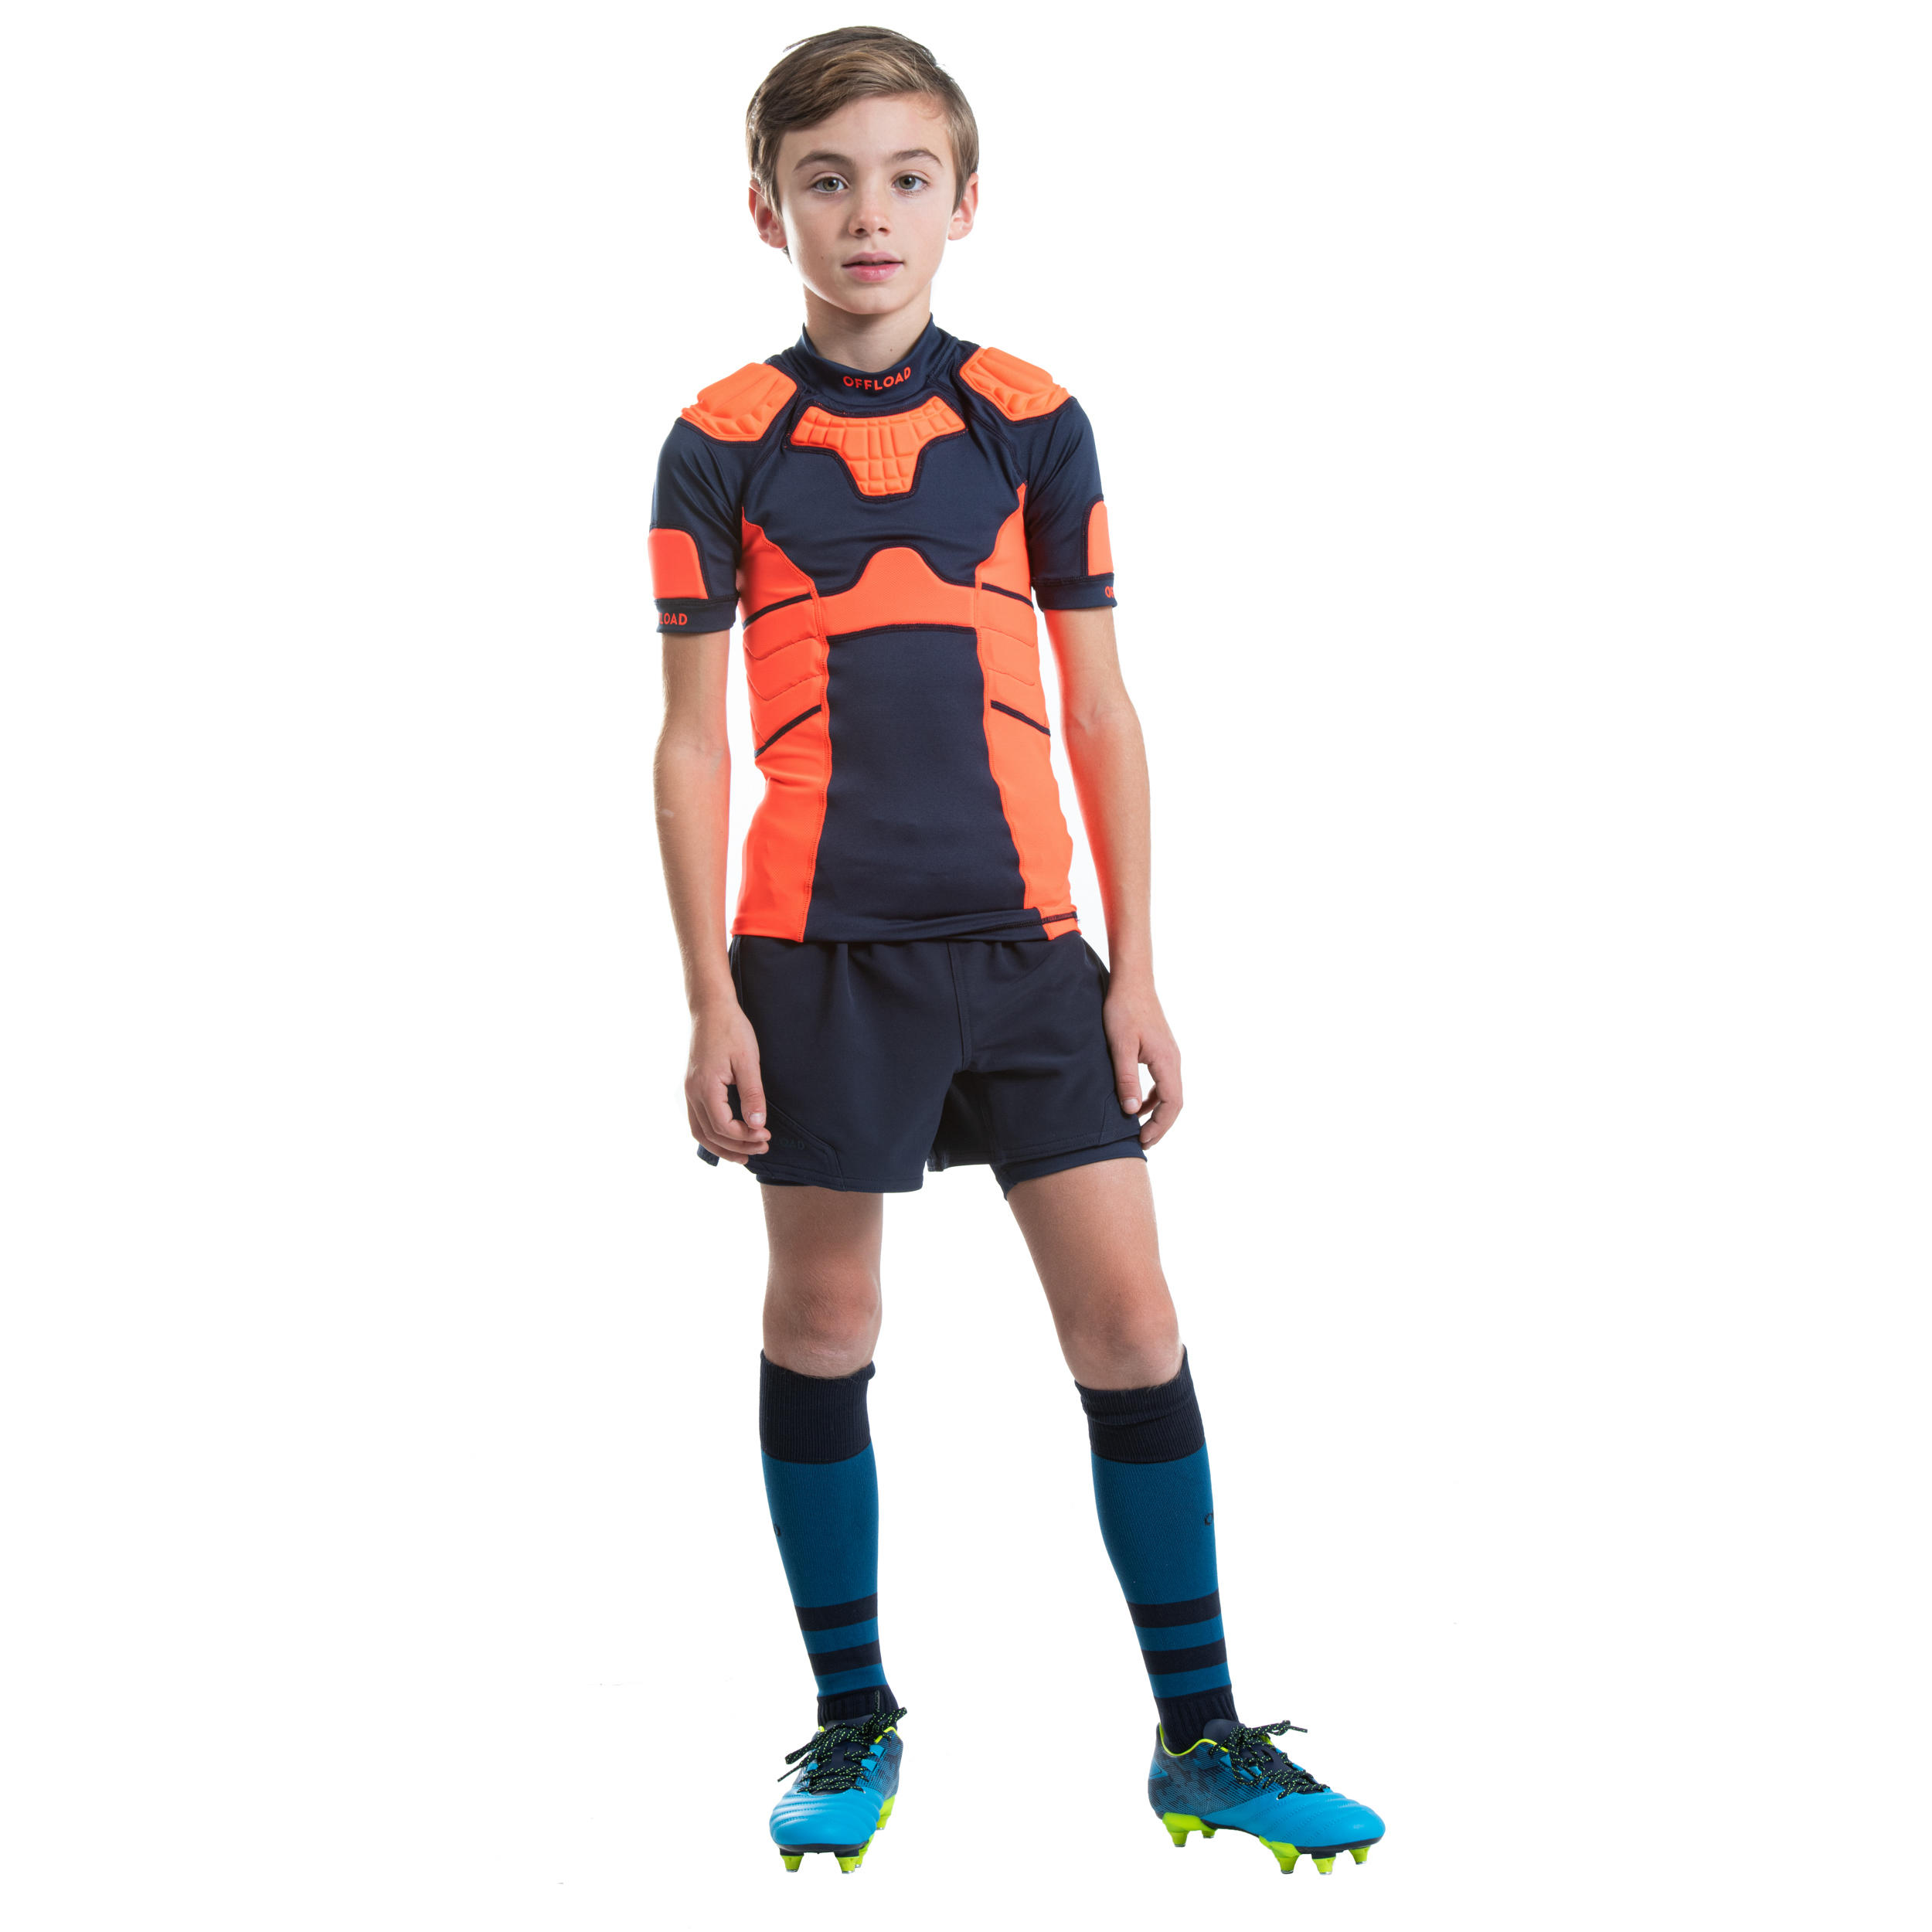 Kids' Rugby Shoulder Pad R500 - Orange 8/13